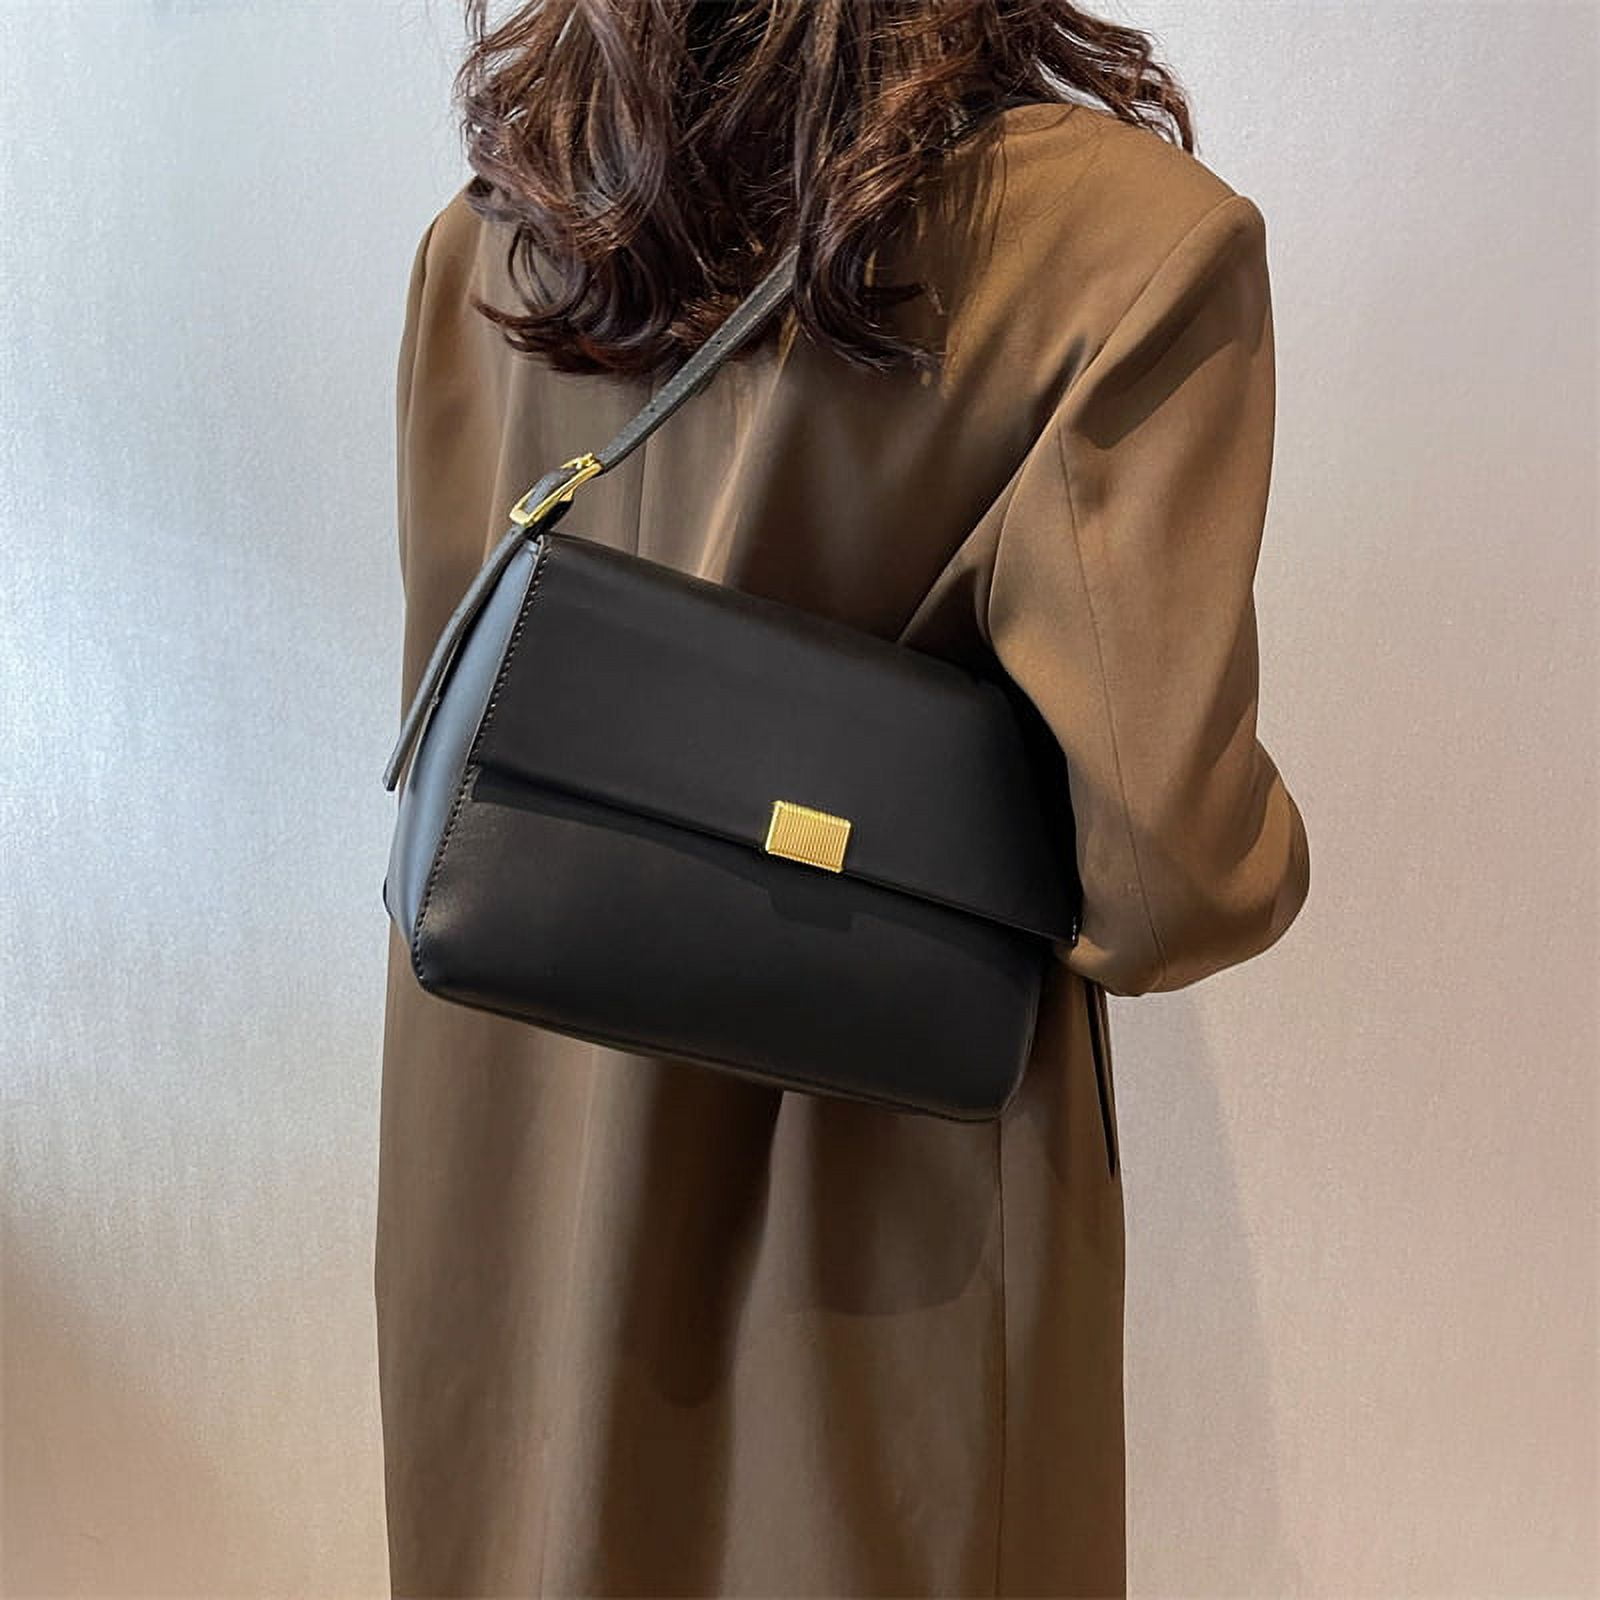 Z-WIN Bag Women 2022 New Fashion Ladies Handbag Soft Leather